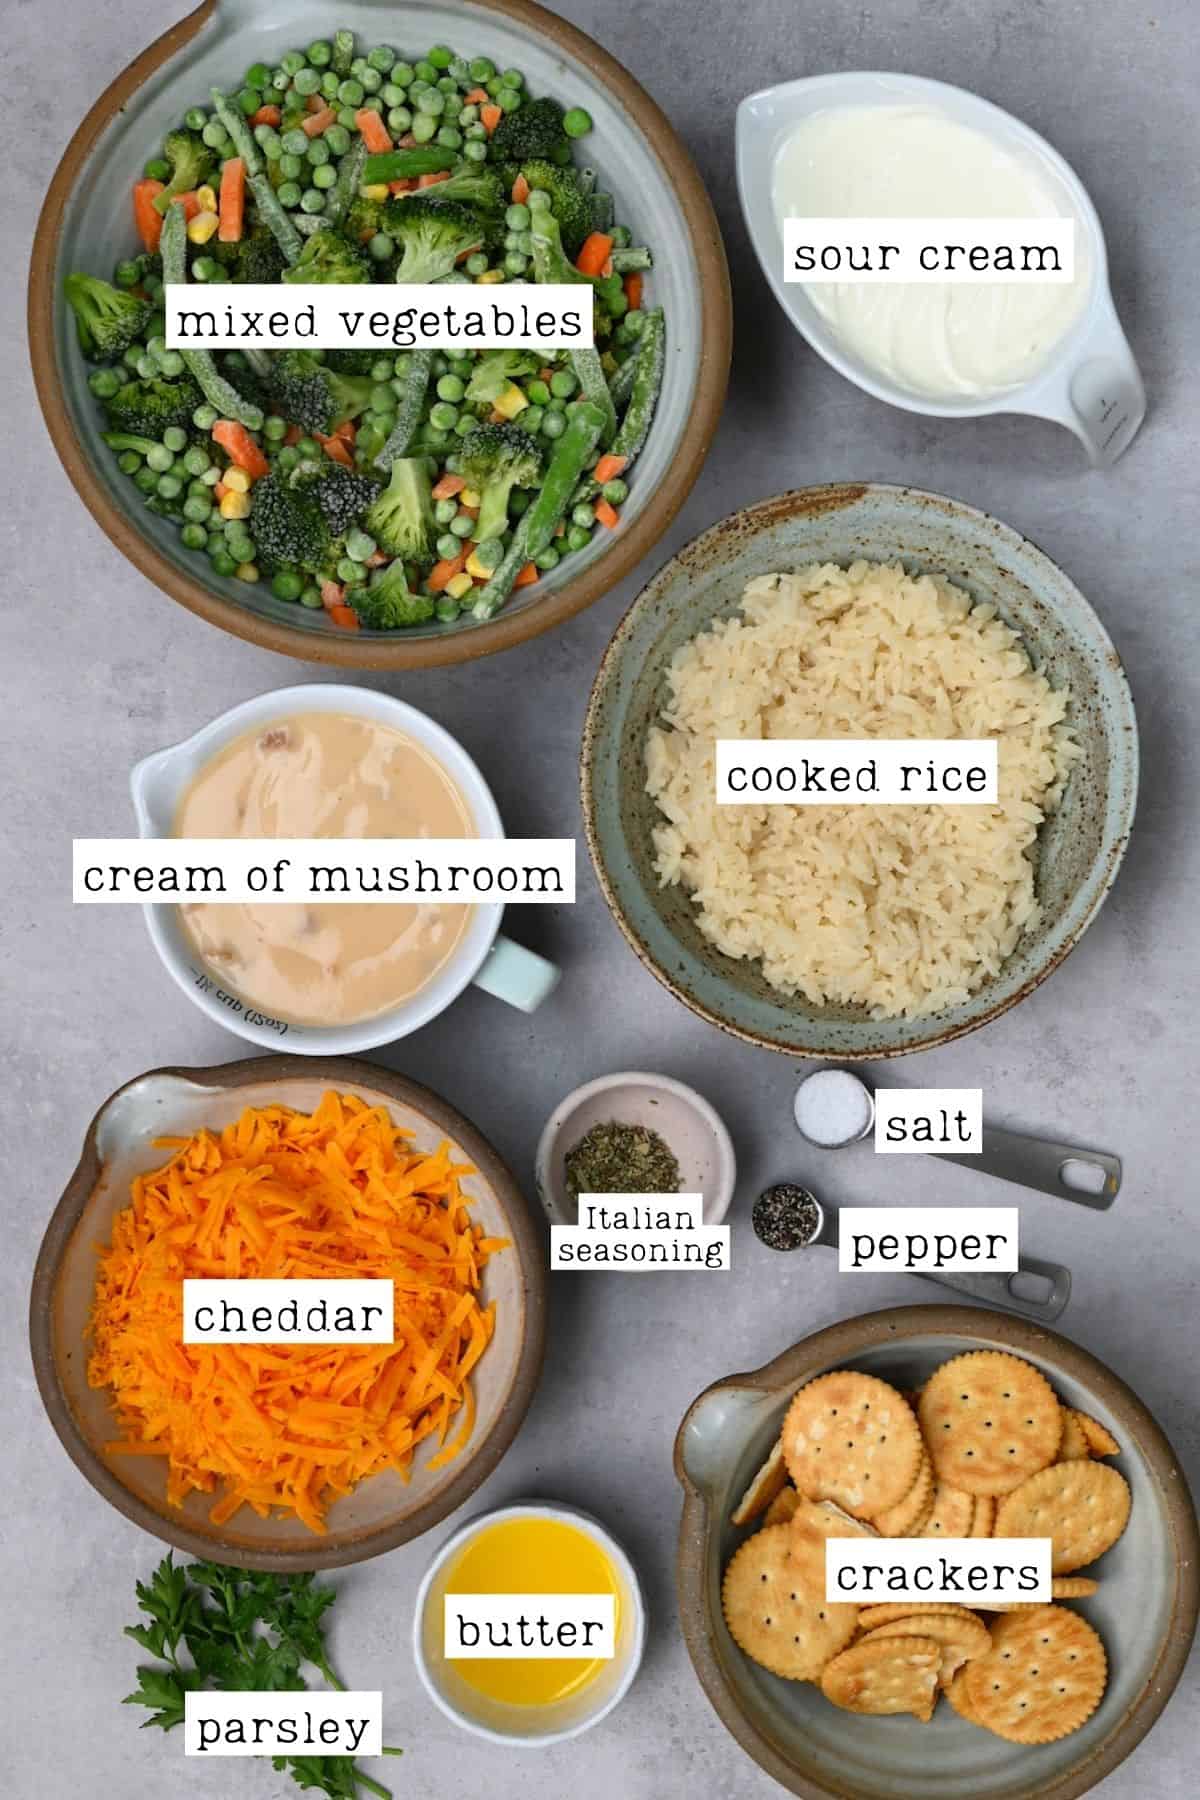 Ingredients for vegetable casserole